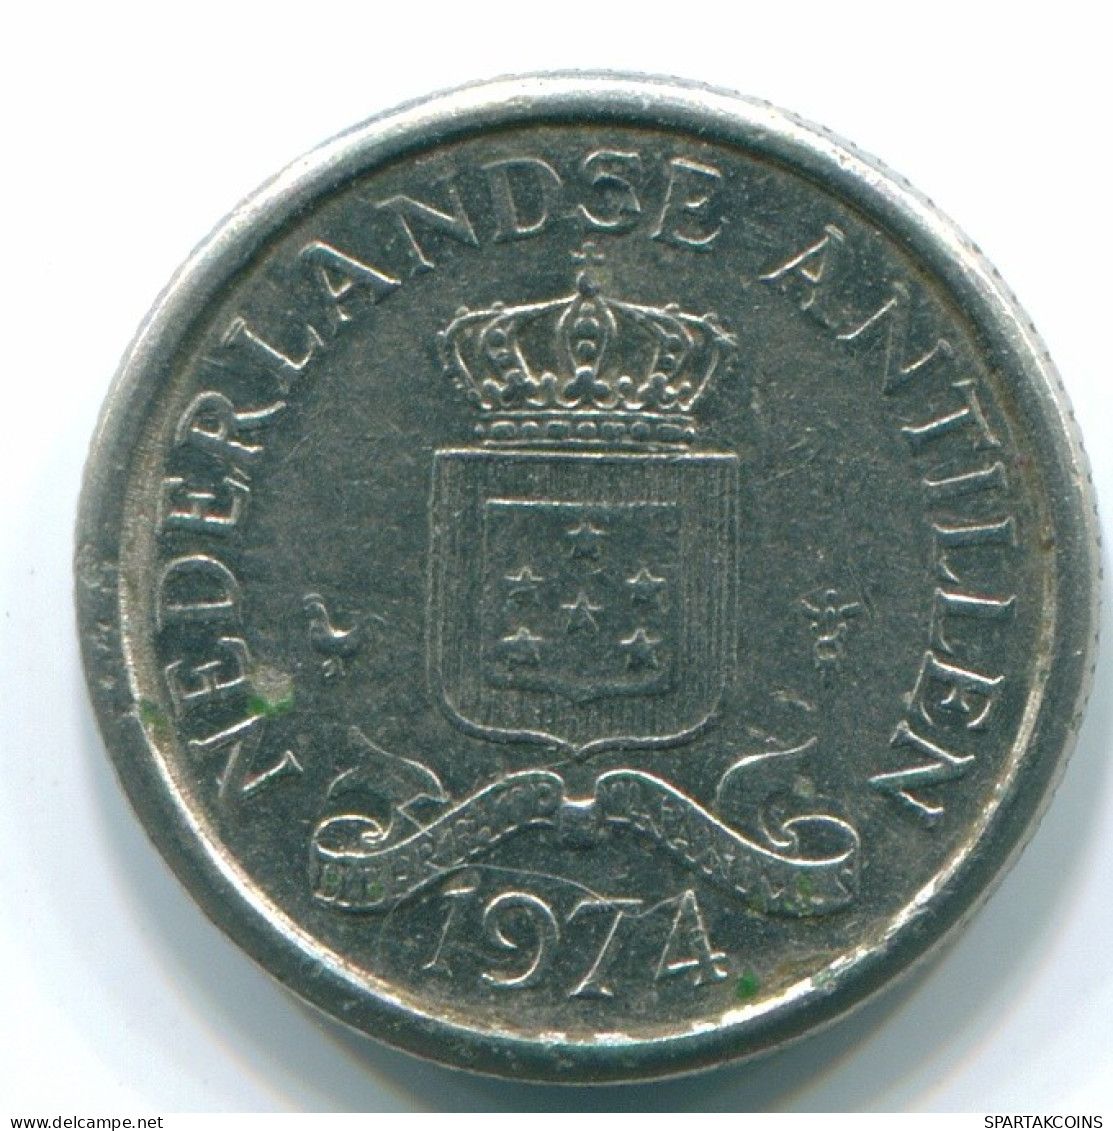 10 CENTS 1974 NIEDERLÄNDISCHE ANTILLEN Nickel Koloniale Münze #S13509.D.A - Netherlands Antilles